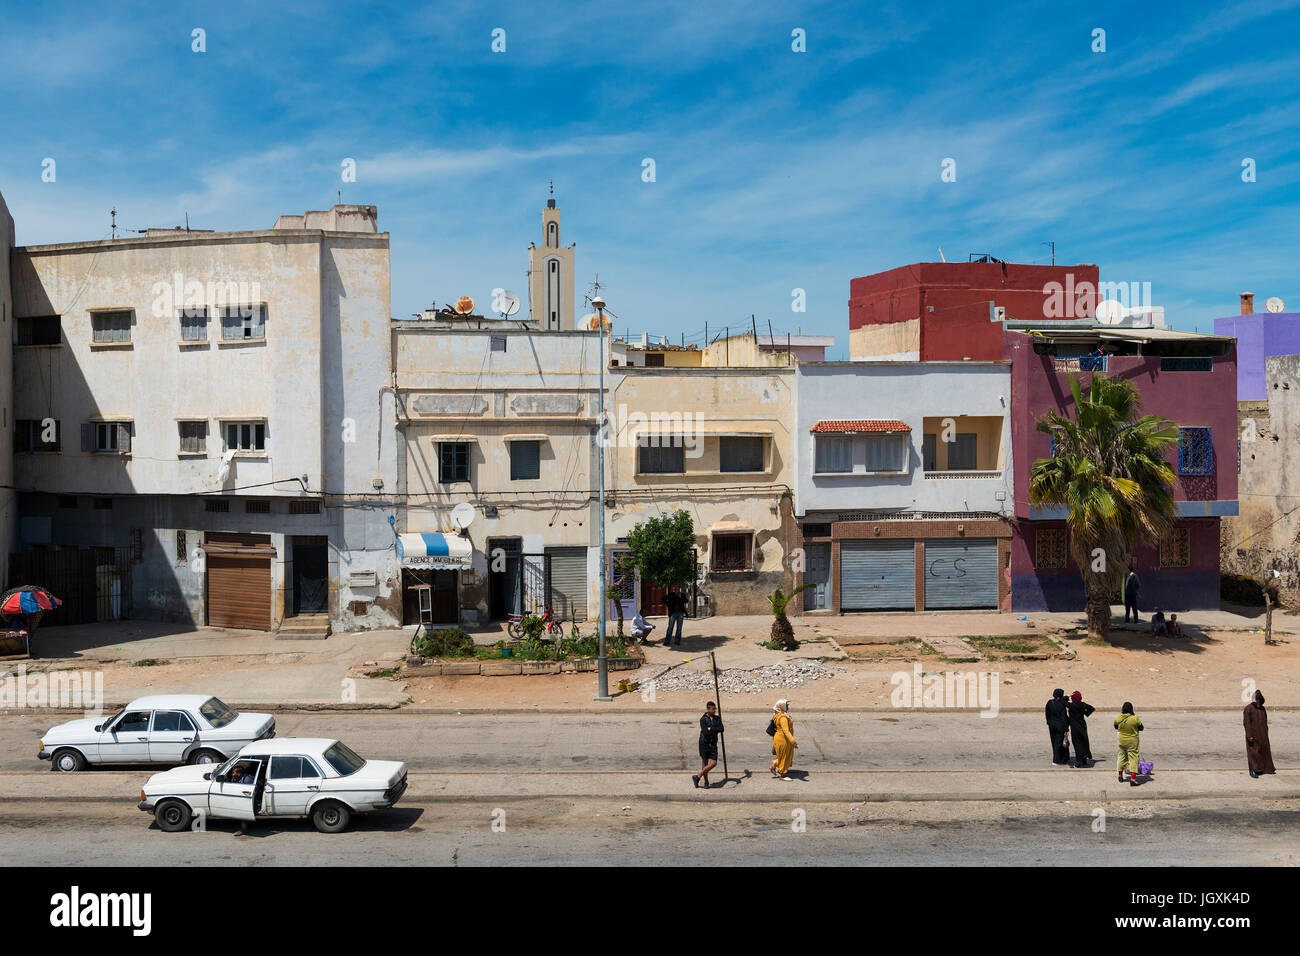 El Jadida, Maroc - 16 Avril 2016 : dans une rue de la ville d'El Jadida dans la région de la côte atlantique du Maroc, l'Afrique du Nord Banque D'Images